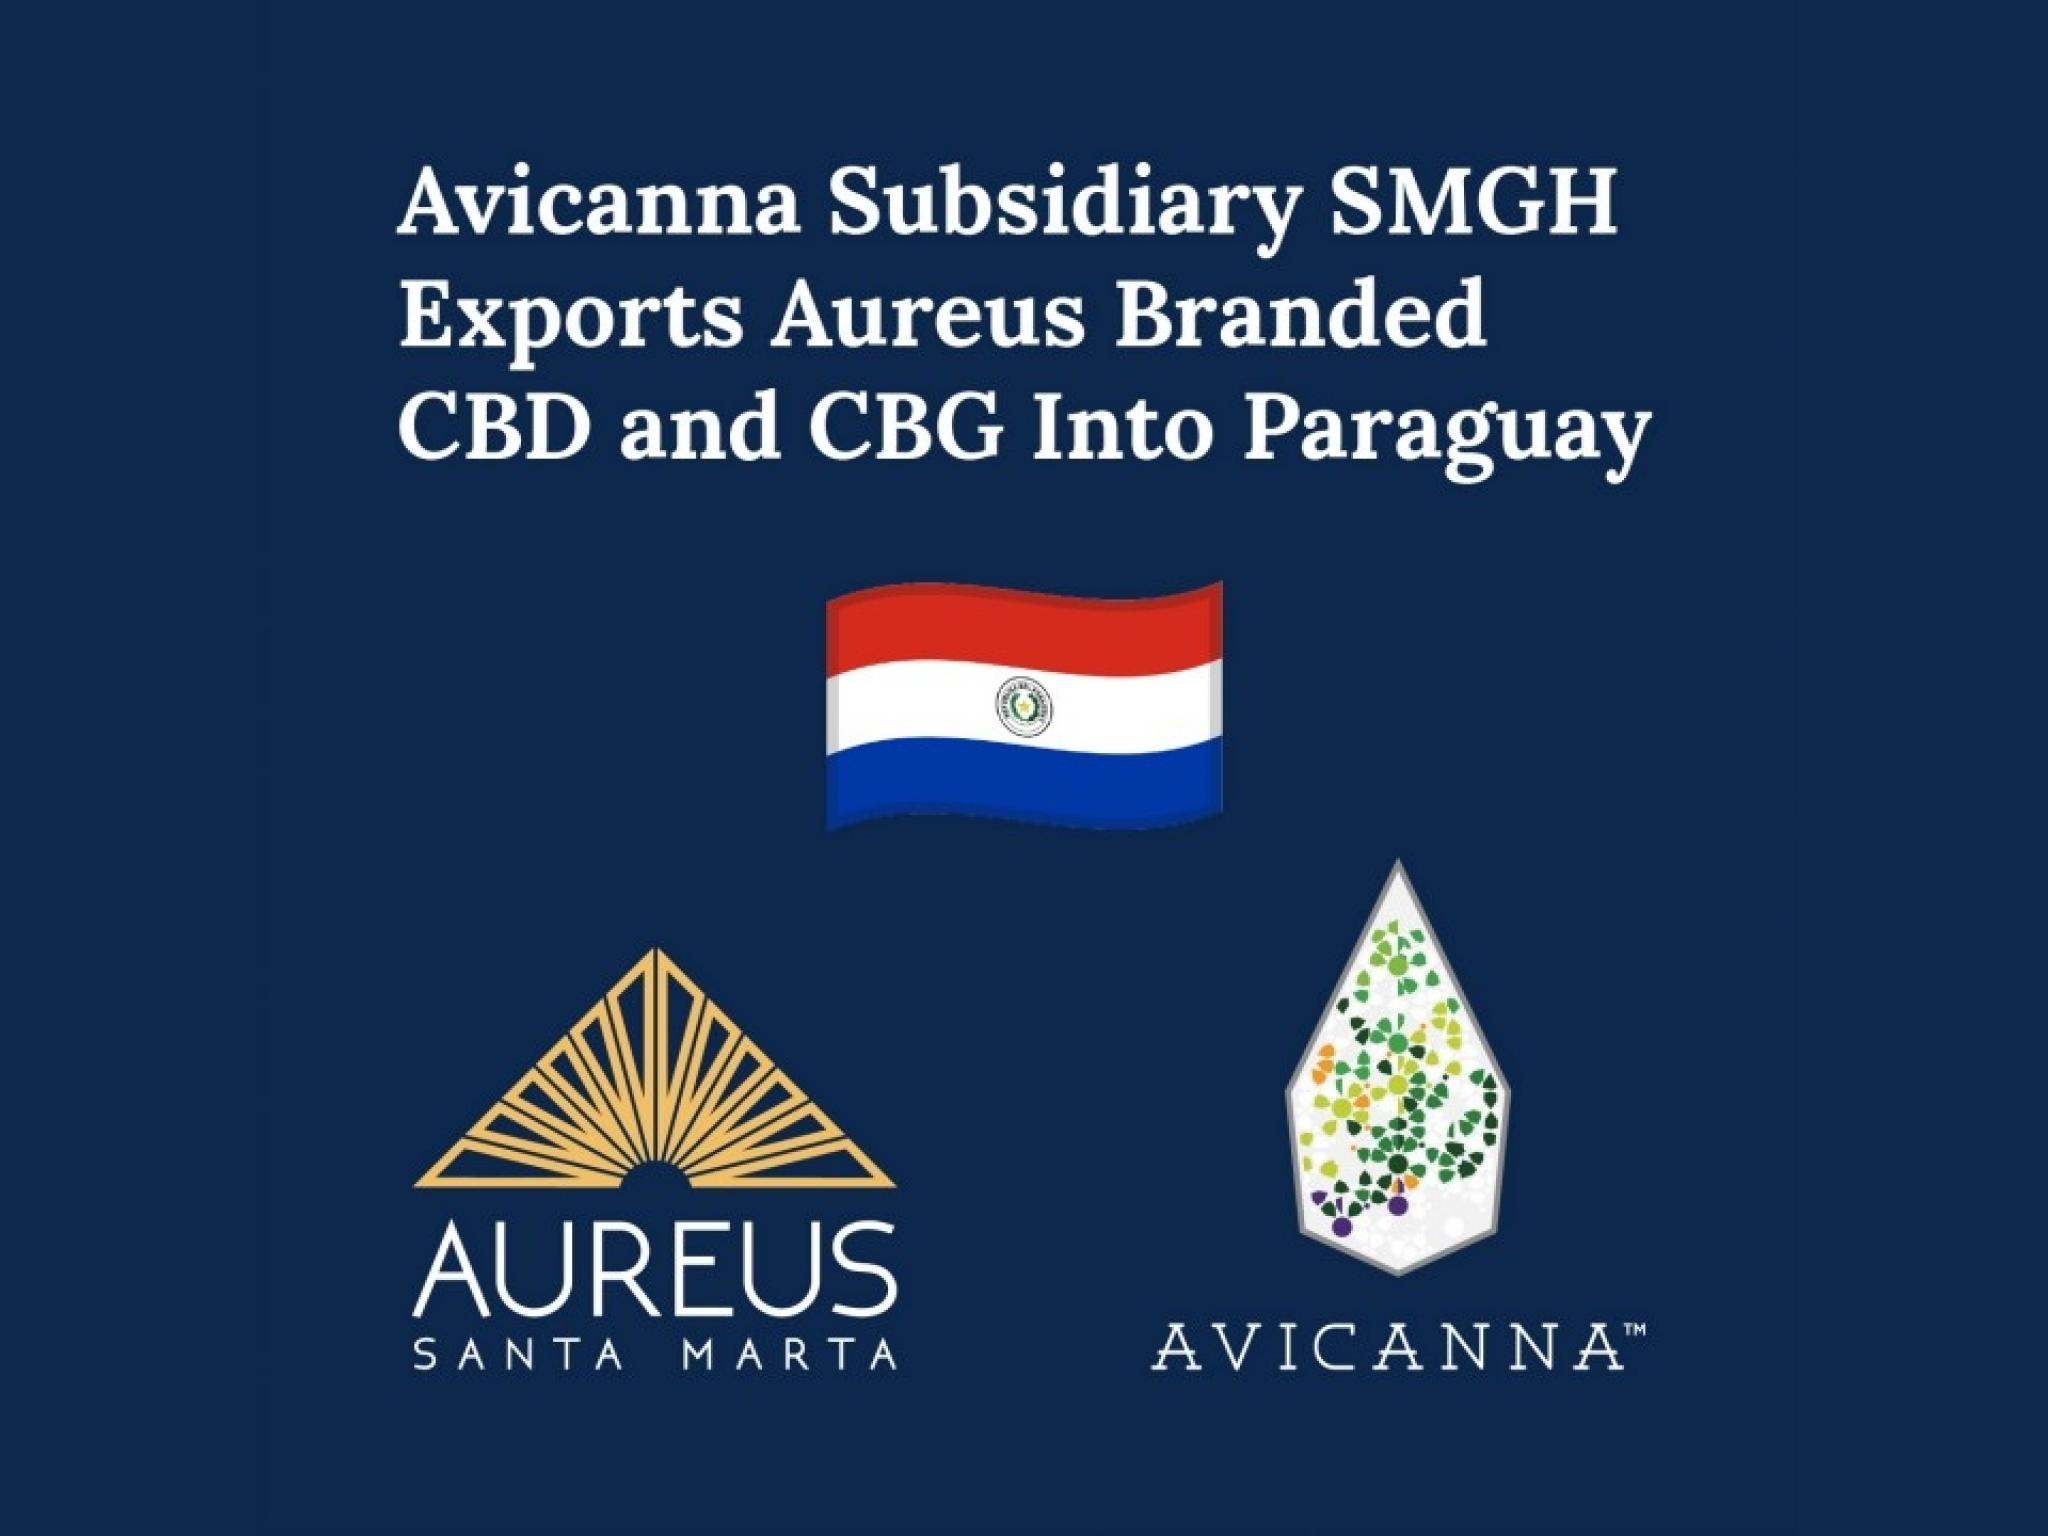  avicannas-smgh-exports-aureus-branded-cbd-and-cbg-into-paraguay 